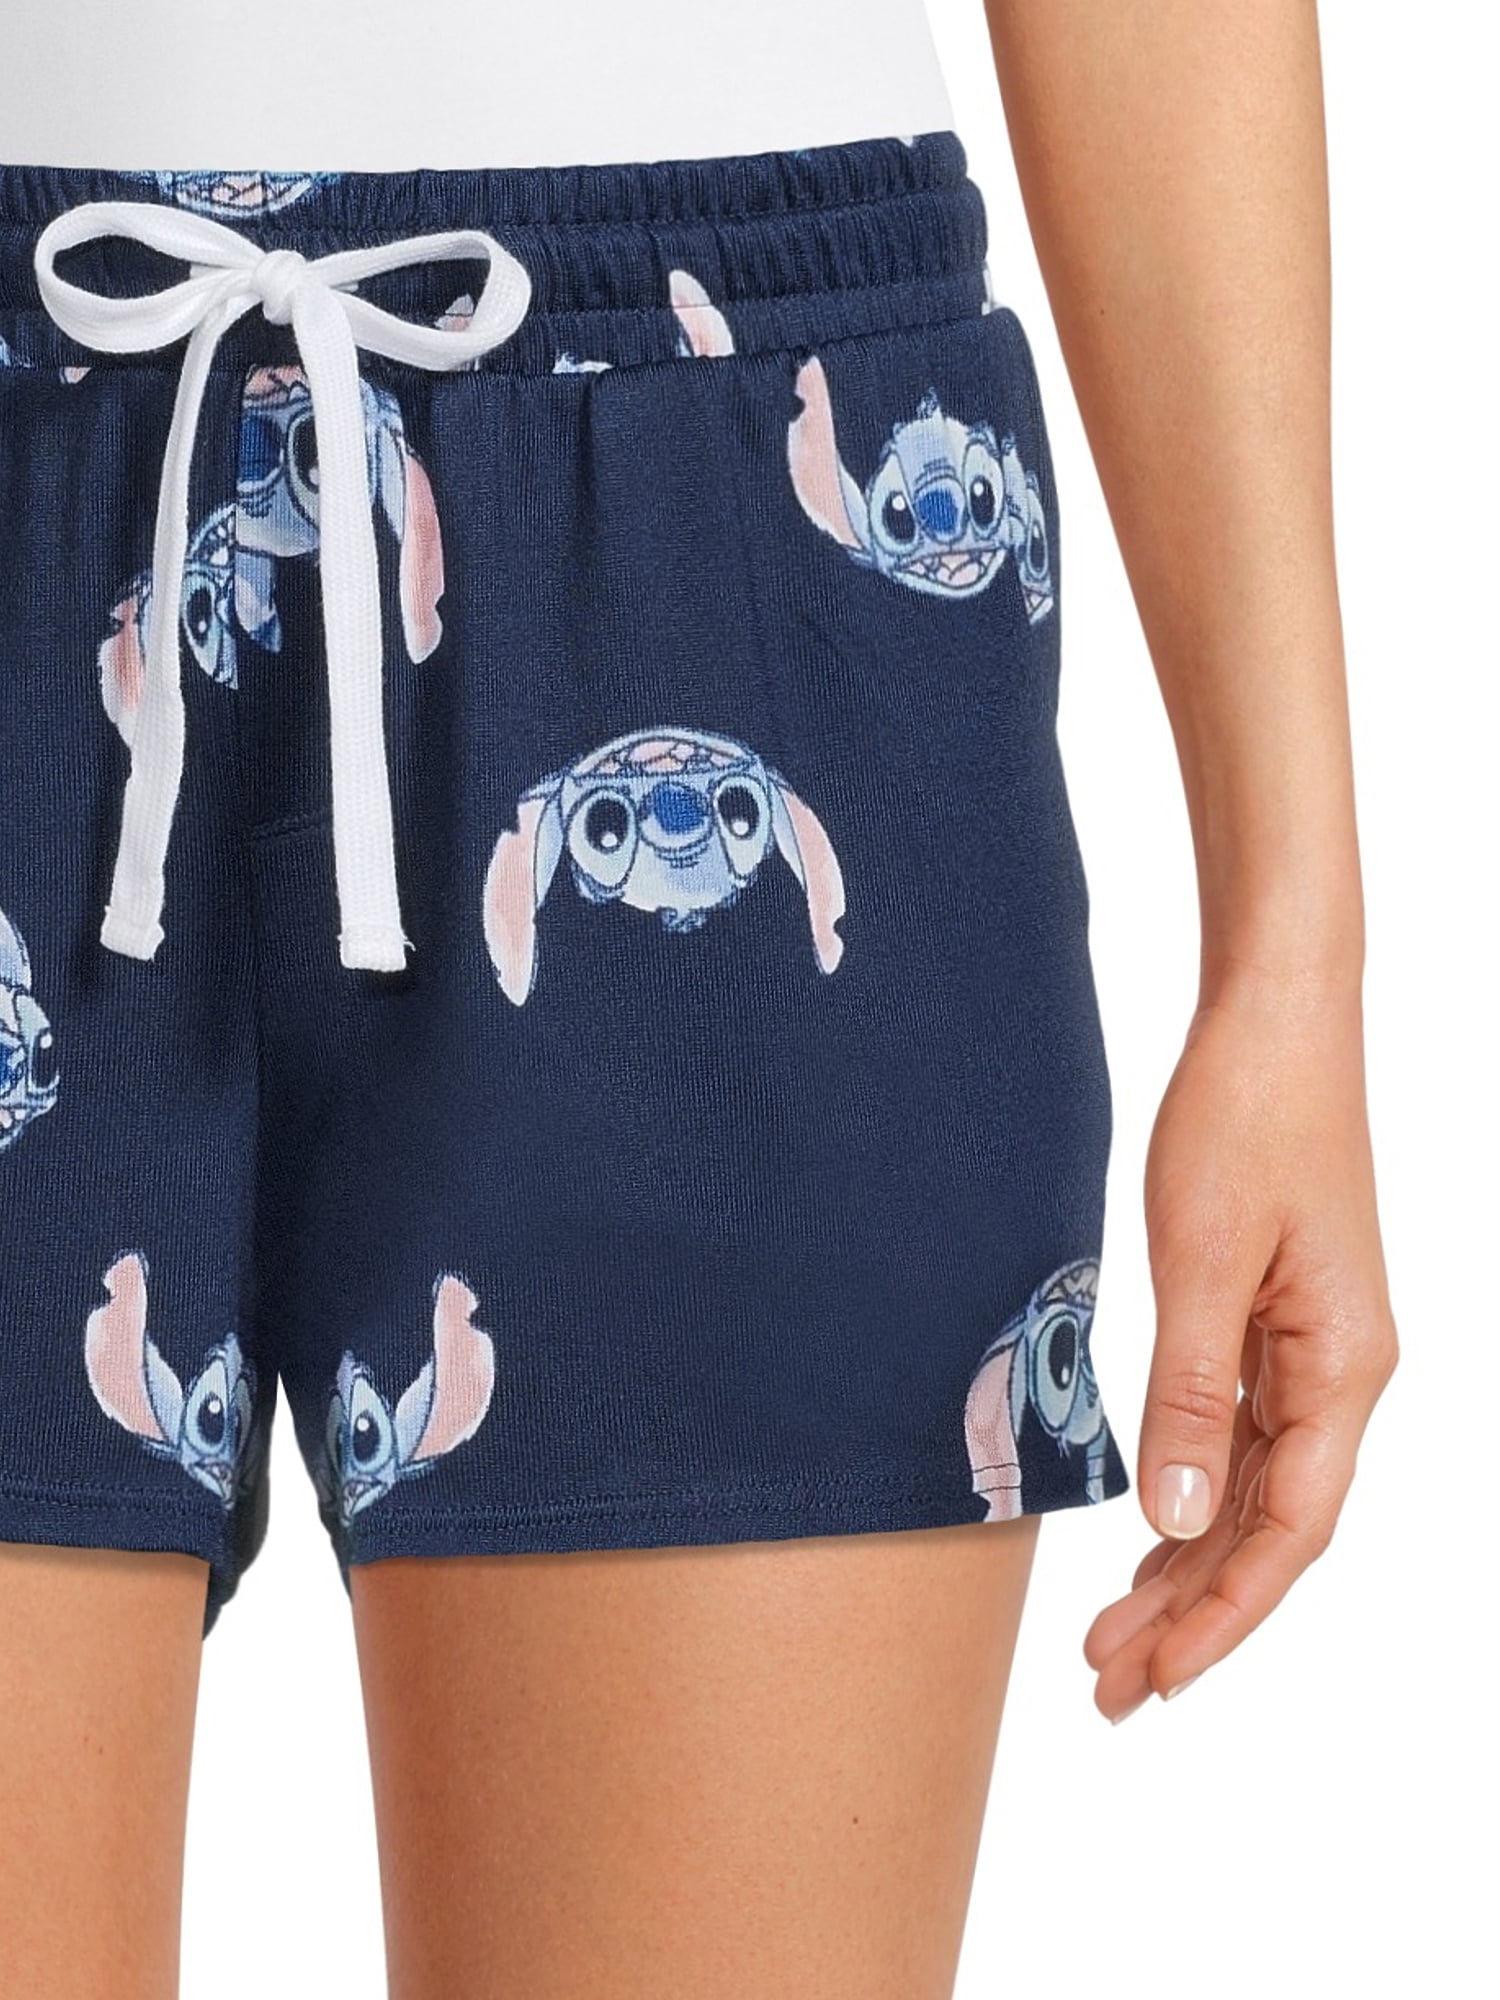 Shortlette Slip Shorts  Undersummers, Disney princess inspired